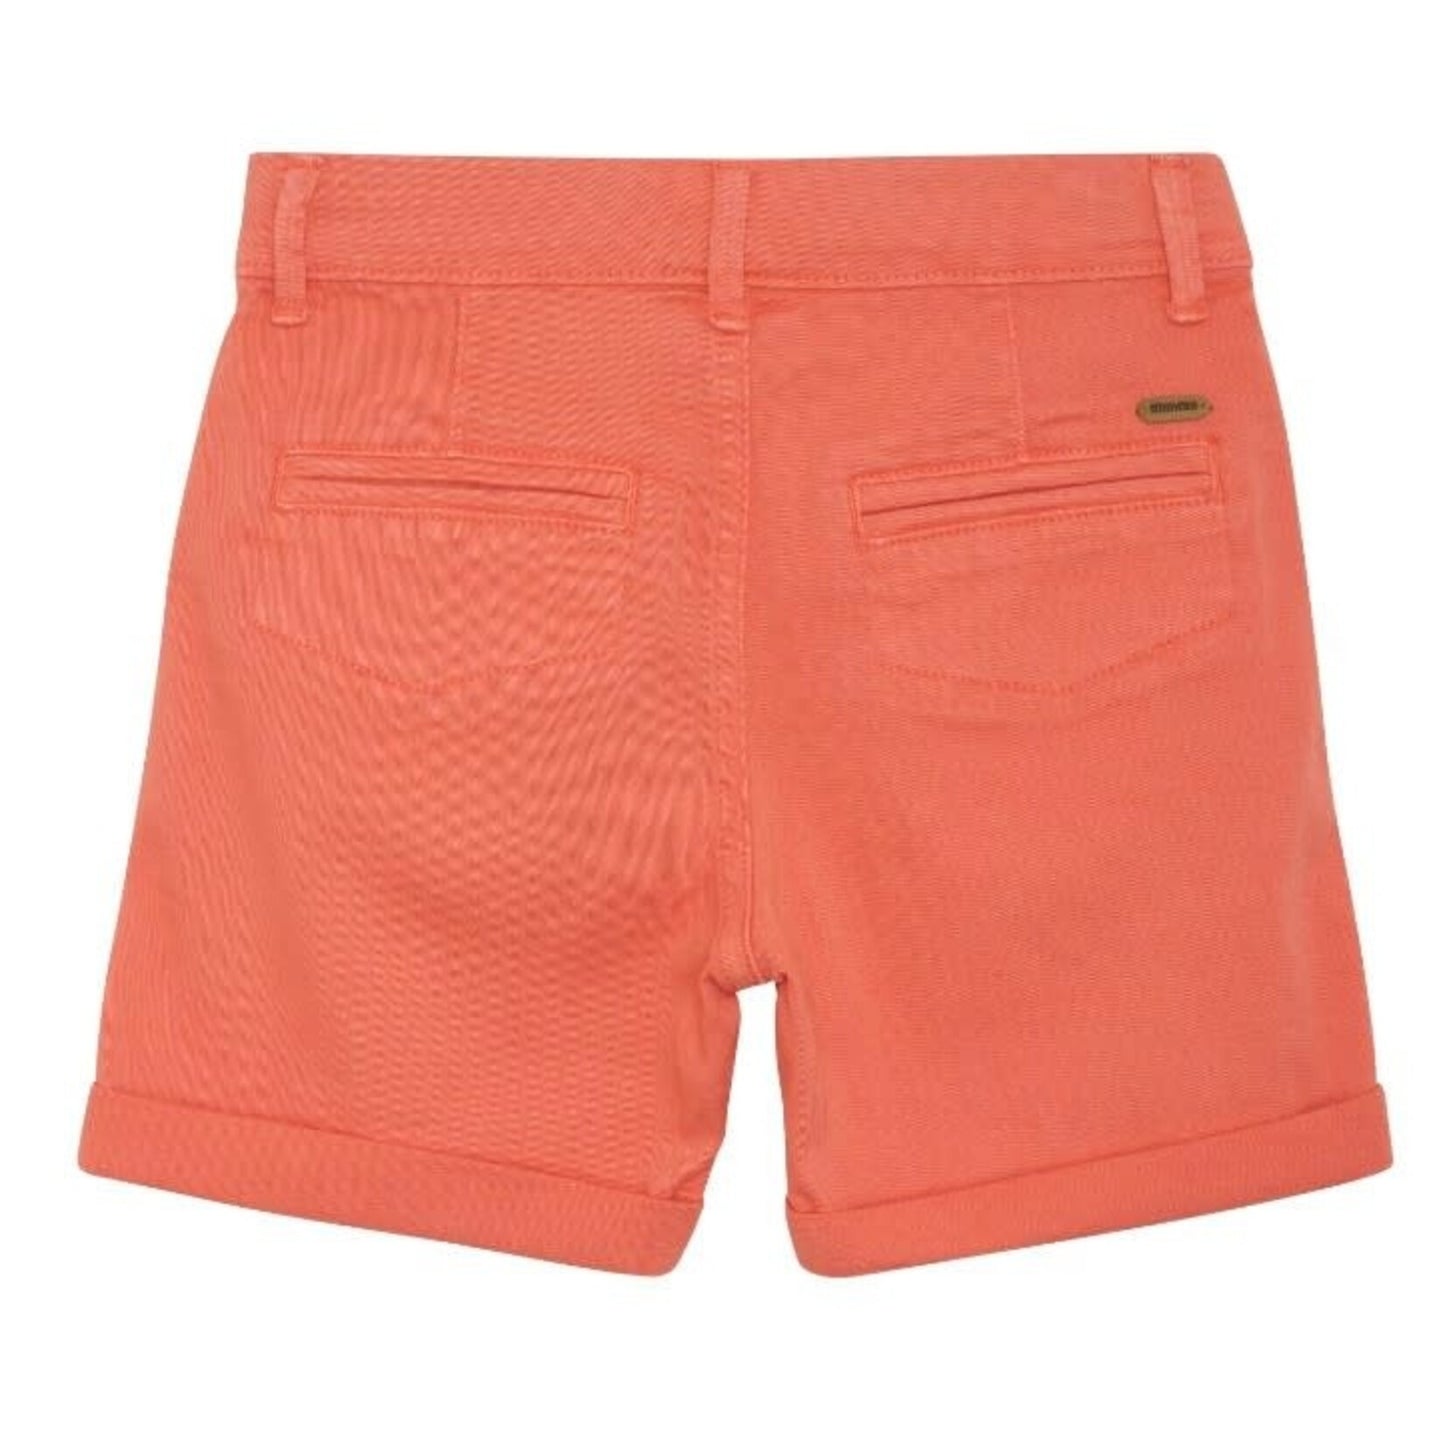 Cotton Twill Shorts - Bright Orange